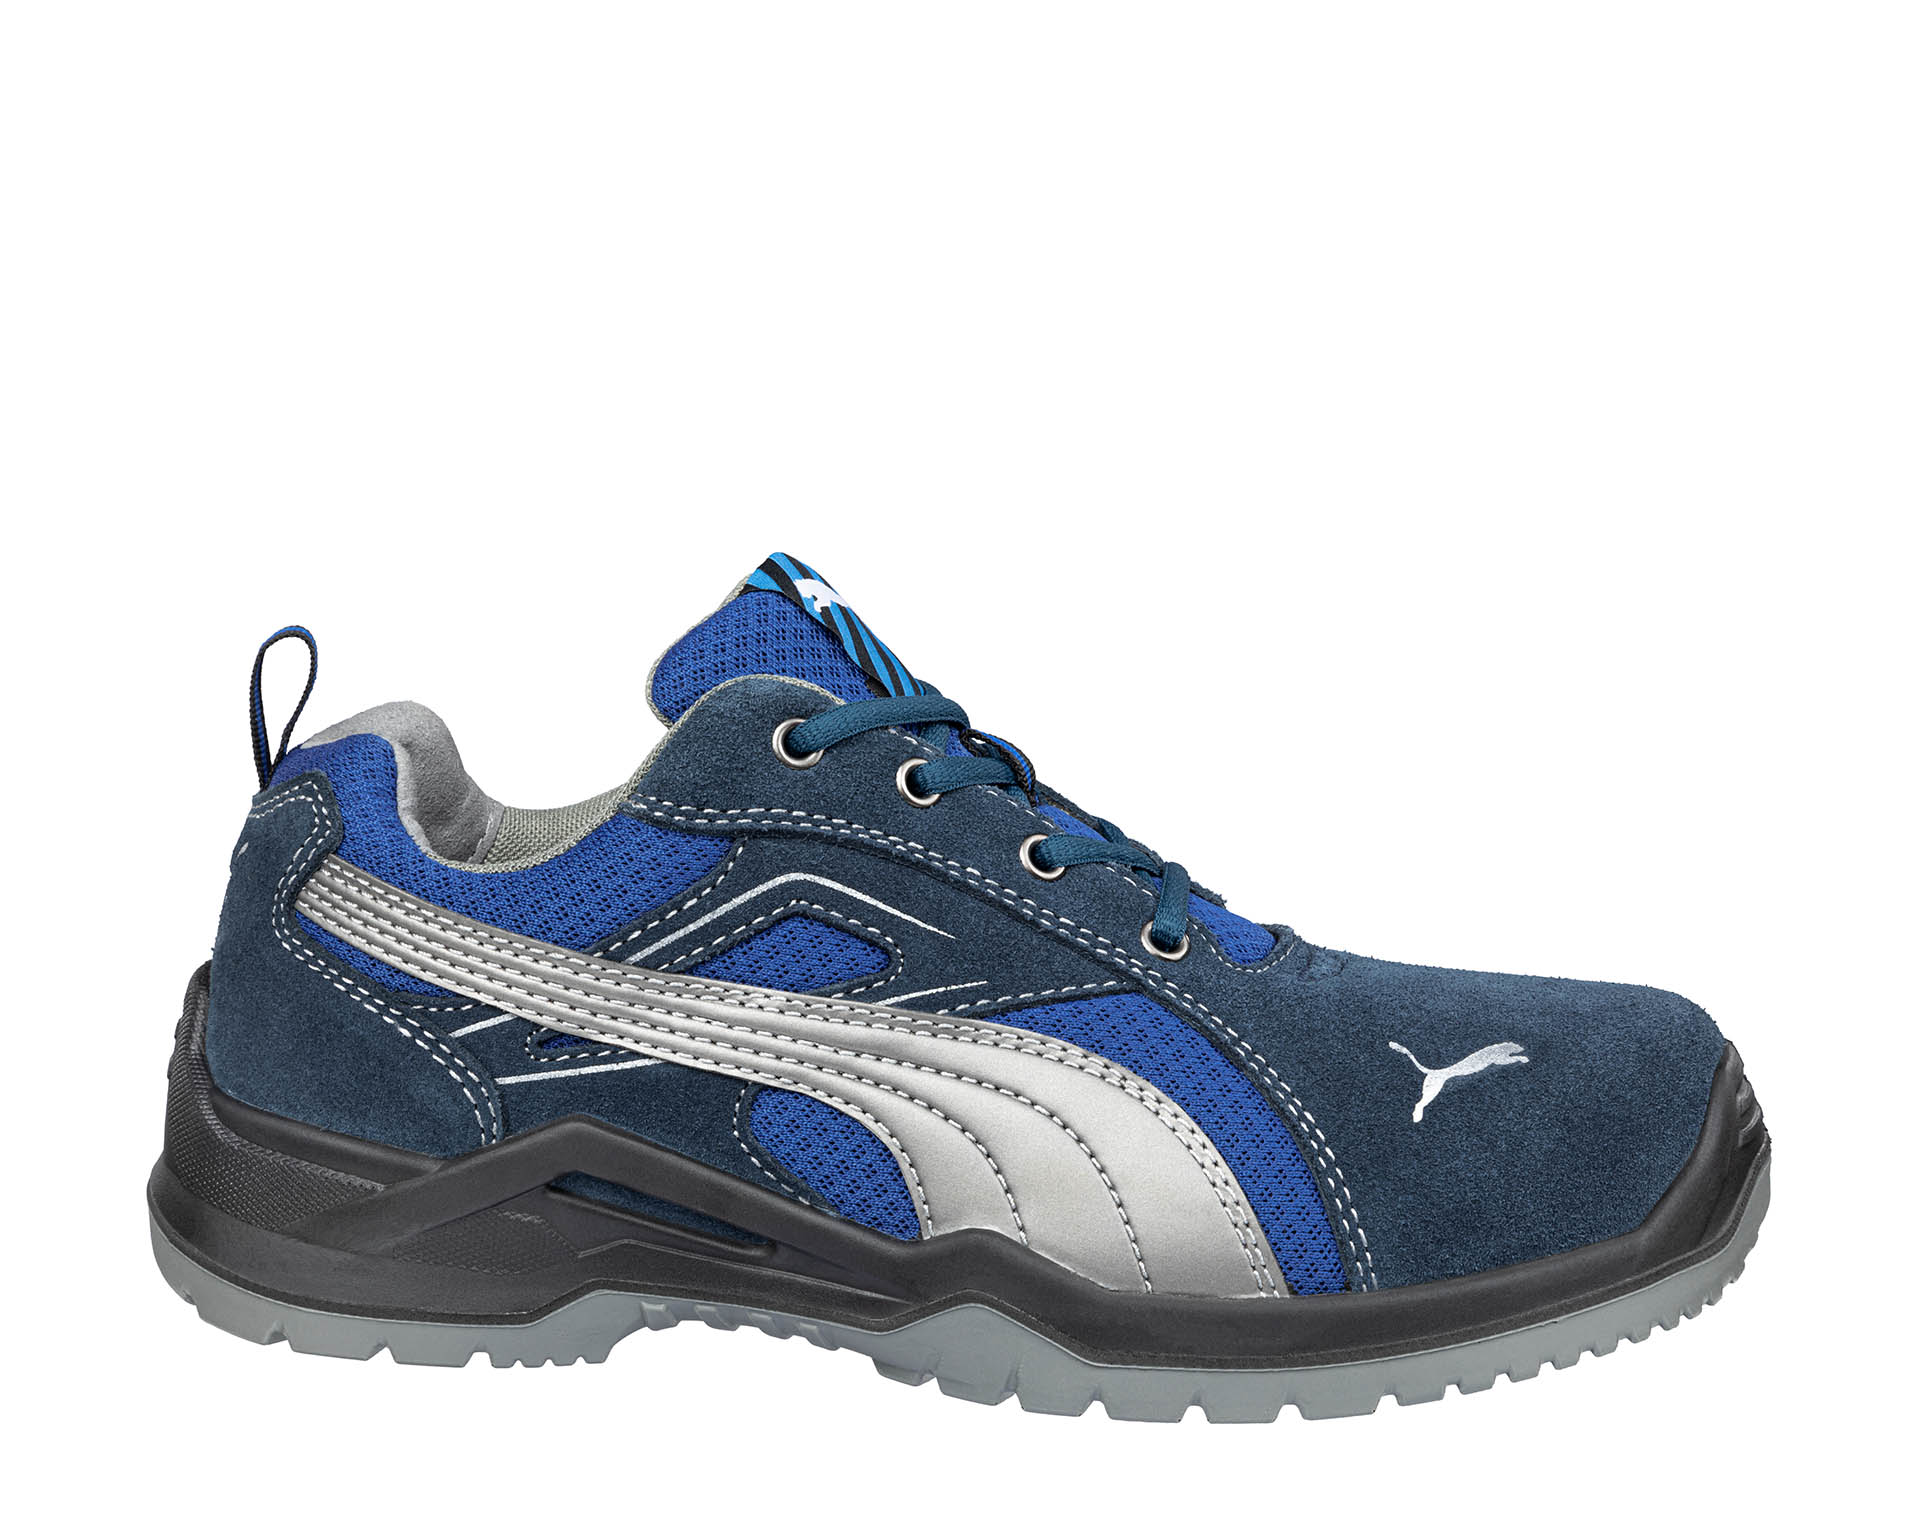 PUMA SAFETY SRC shoes OMNI safety | S1P English Safety LOW Puma BLUE